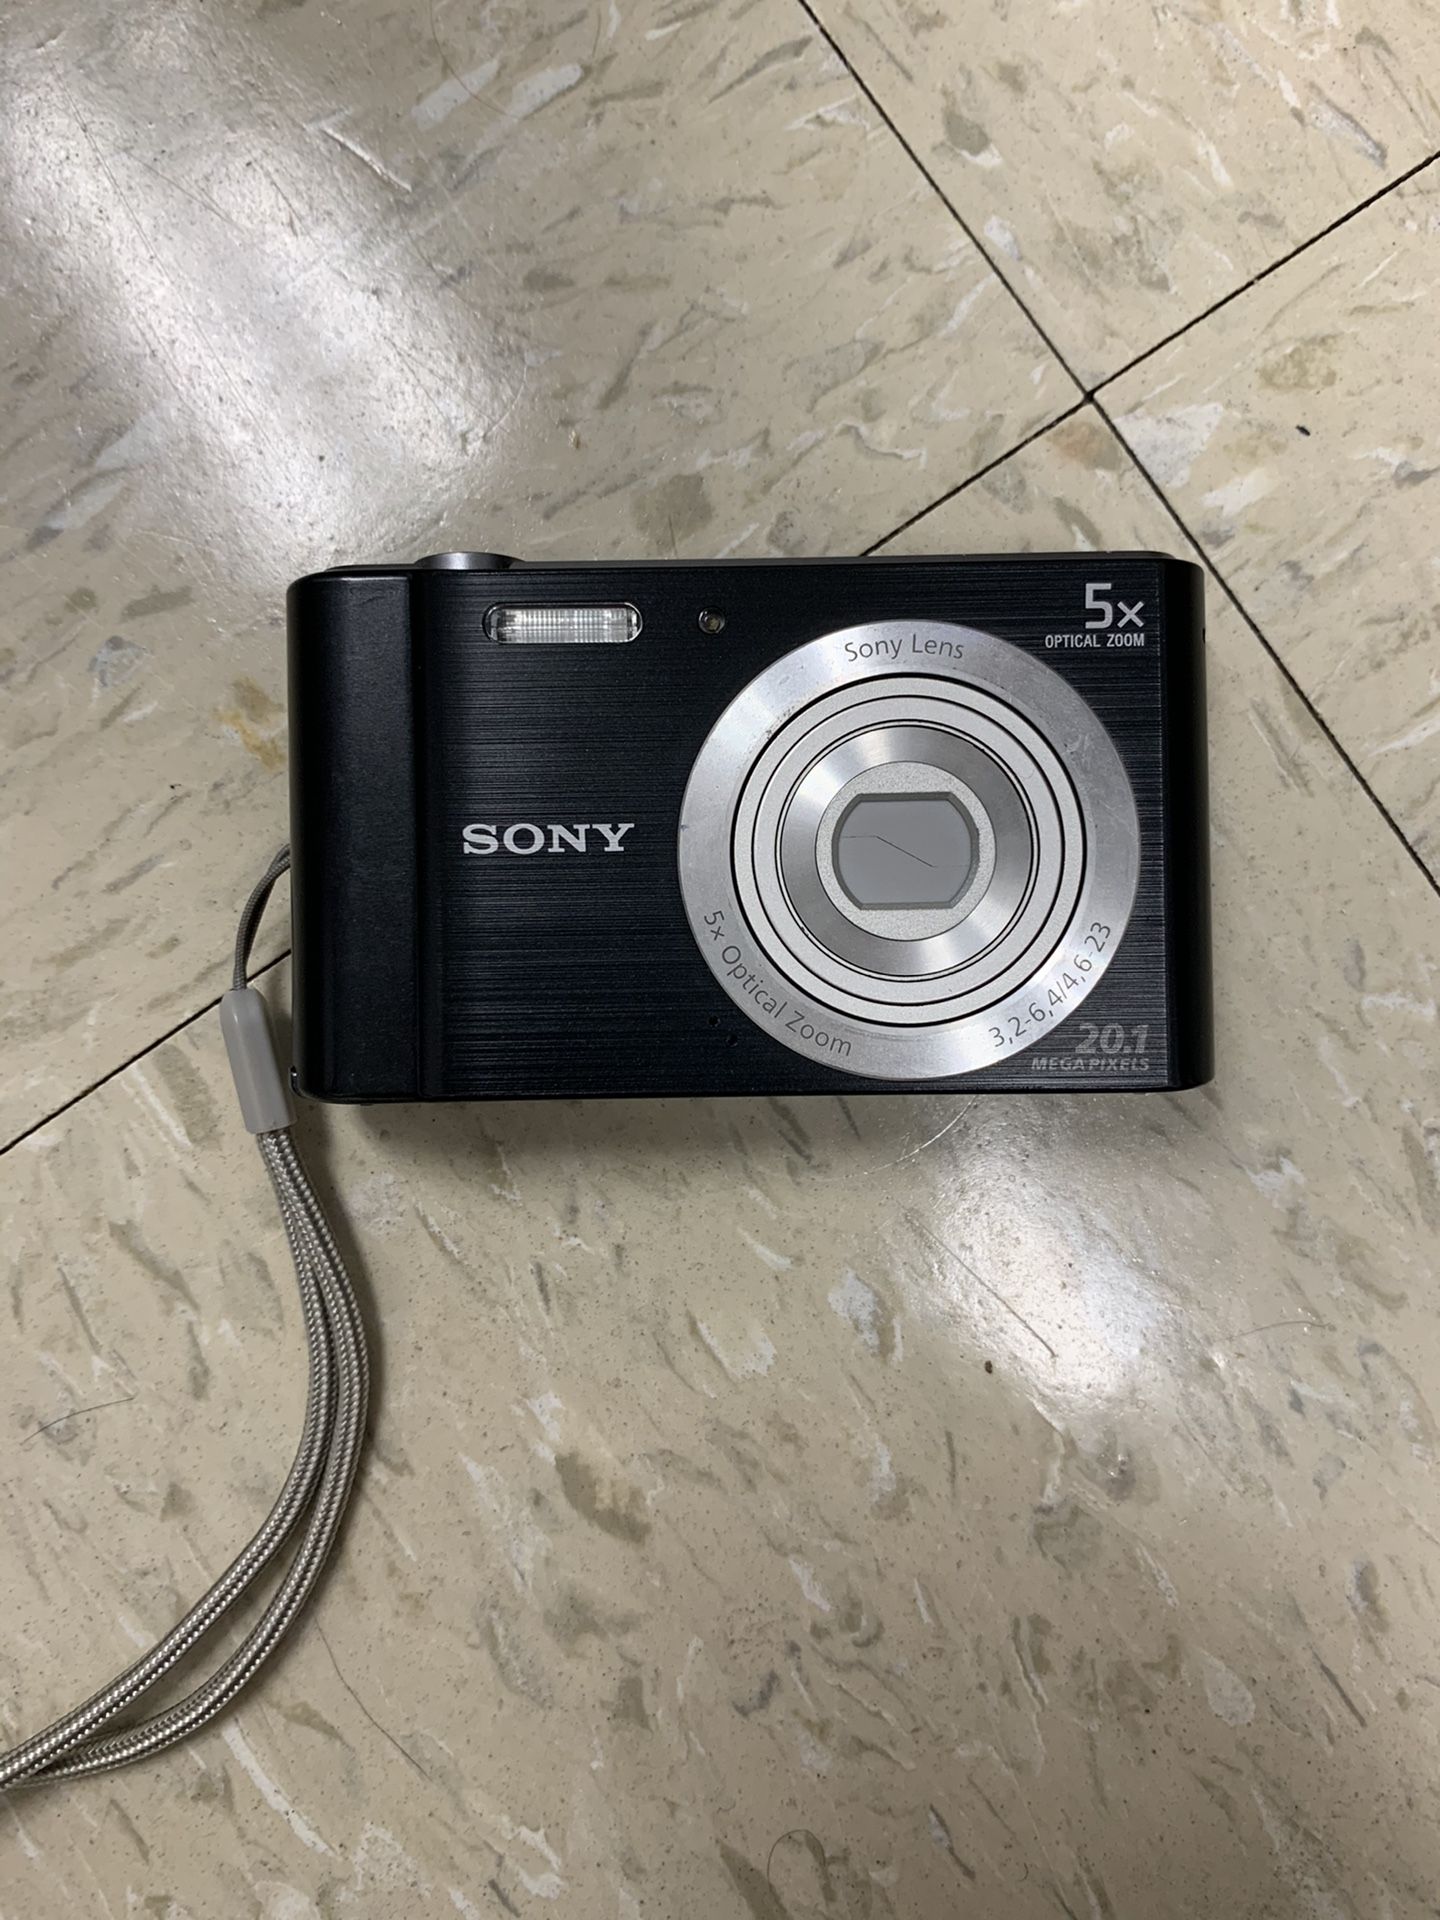 Sony CyberShot Digital camera